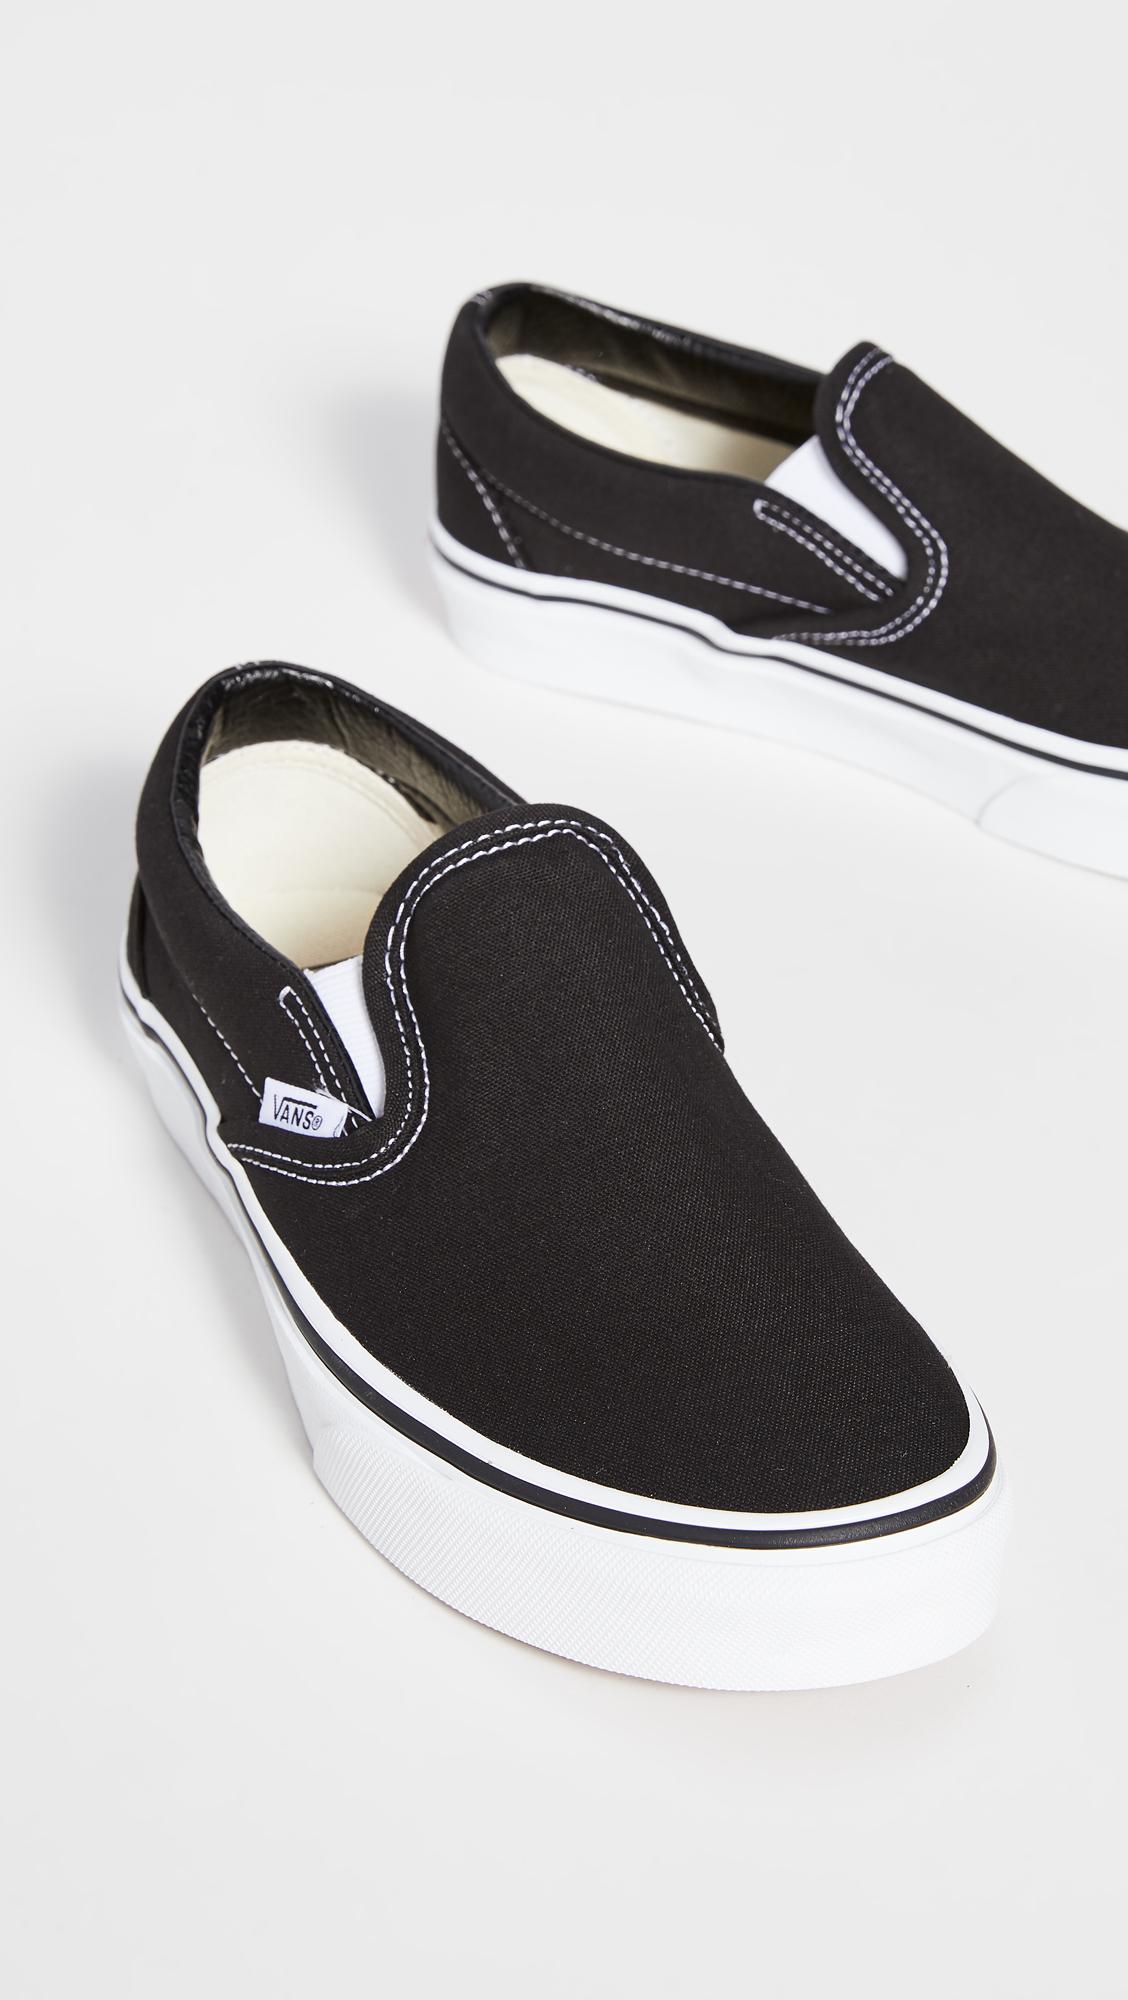 Vans Canvas Ua Classic Slip On Sneakers in Black - Lyst